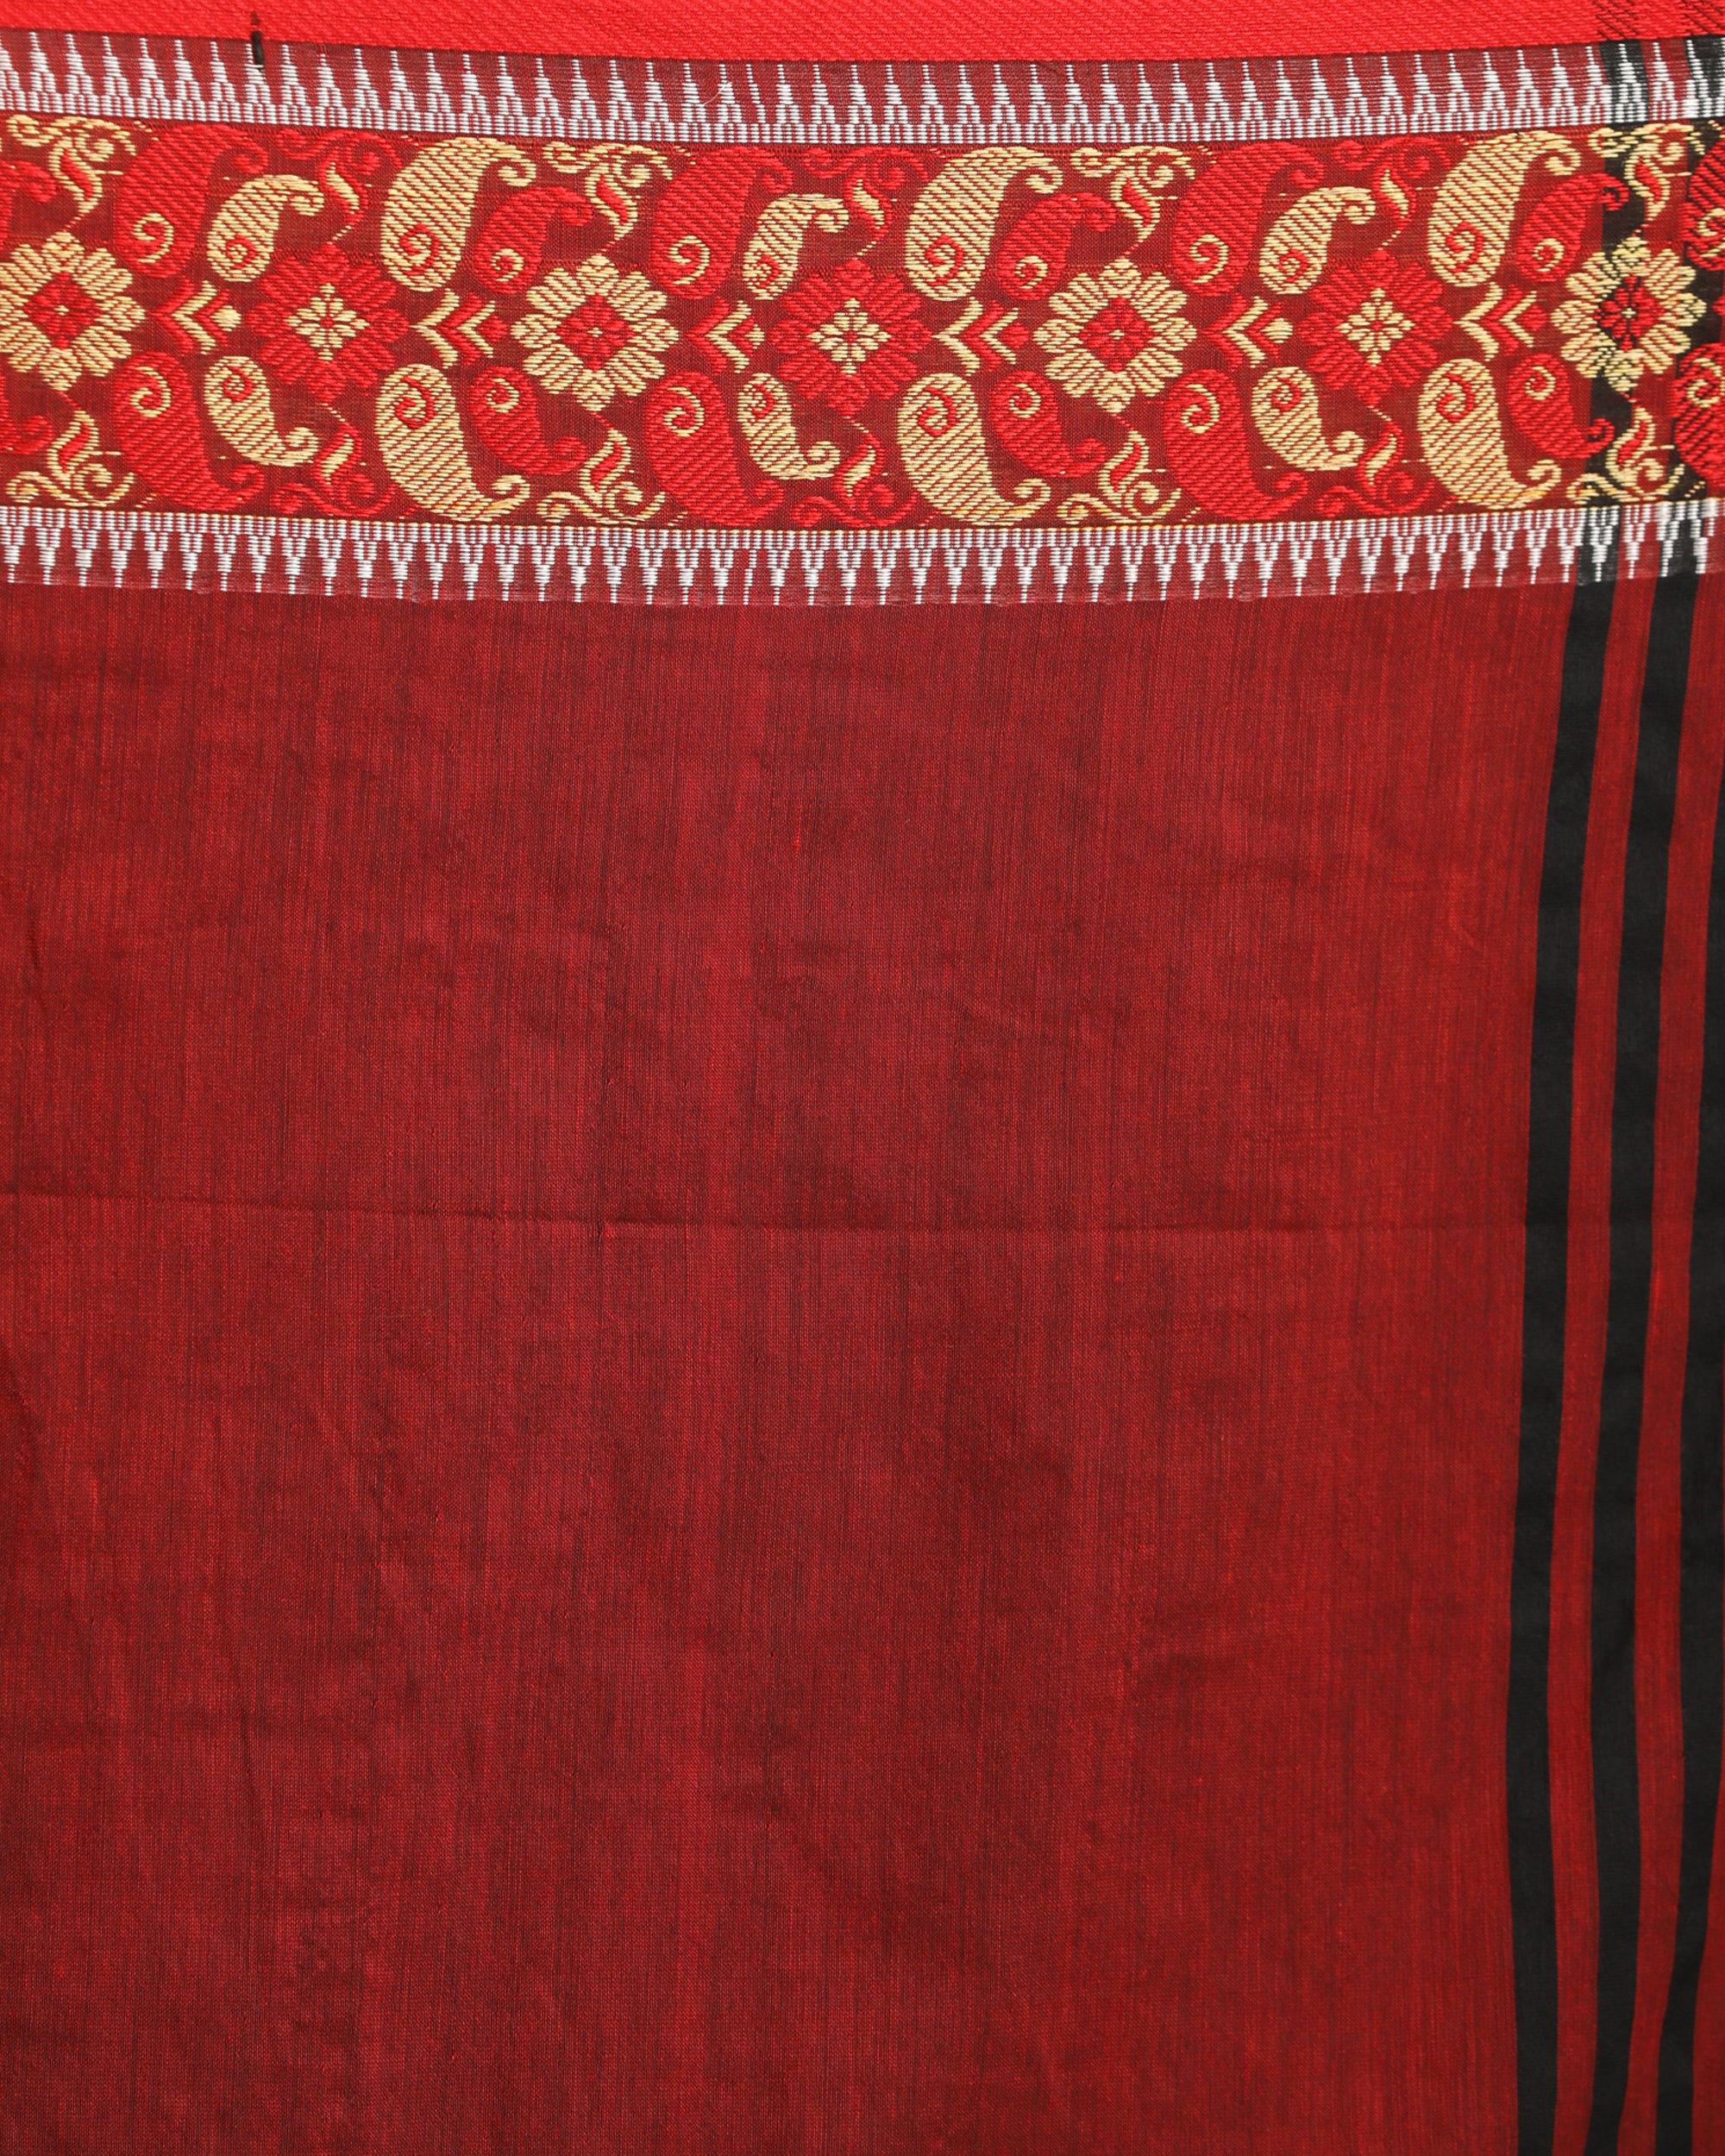 Women's Black Handloom Cotton Tangail Saree - Angoshobha